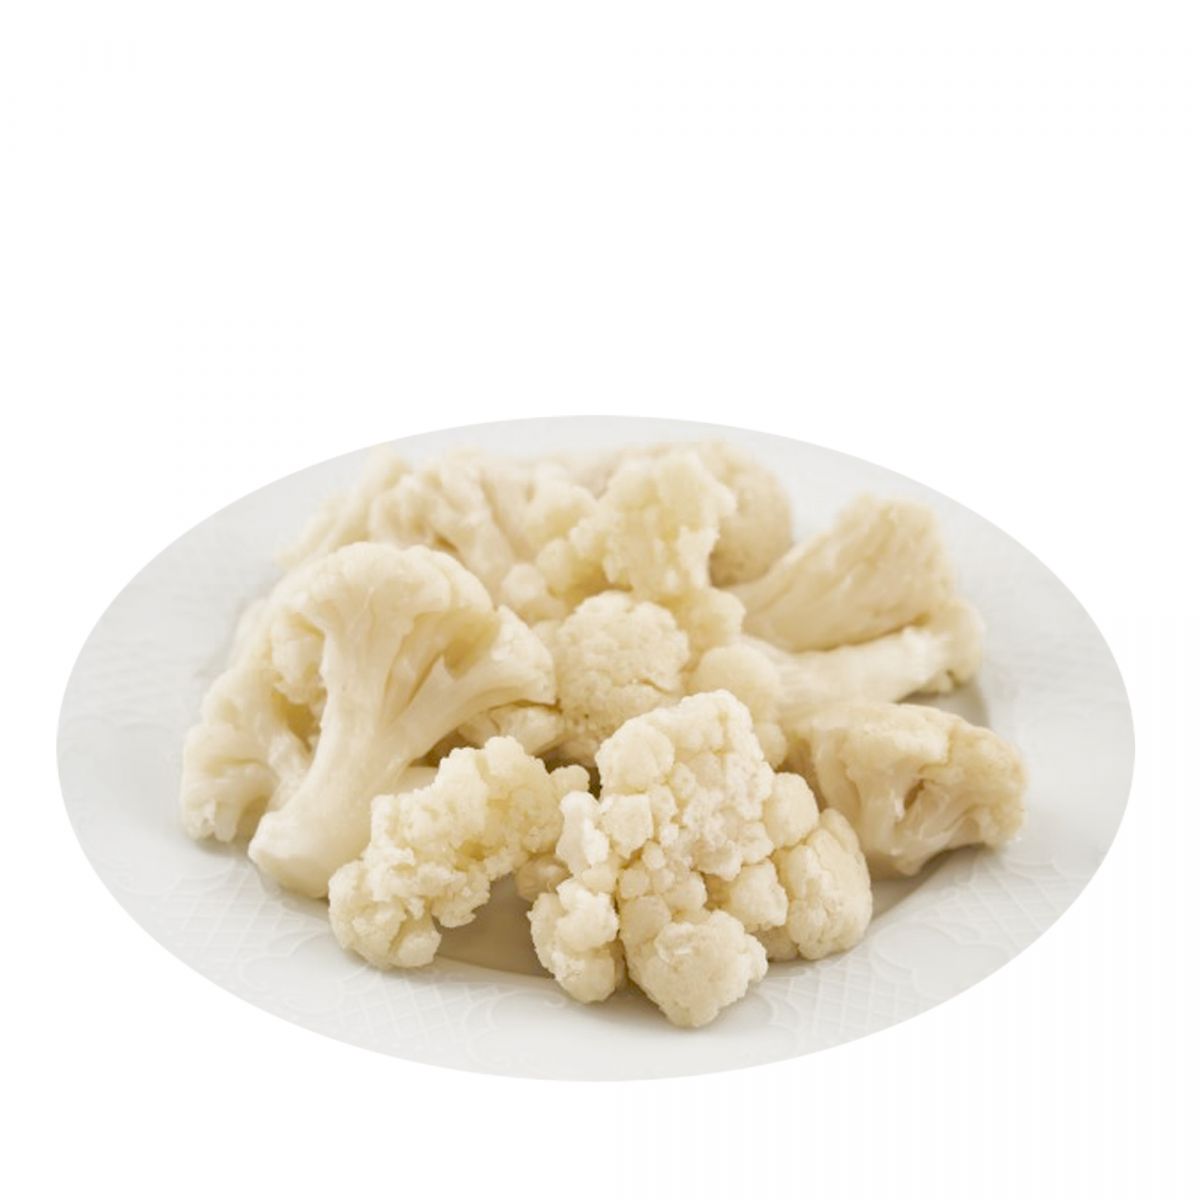 http://lavifood.com/en/products/blanching/cauliflower